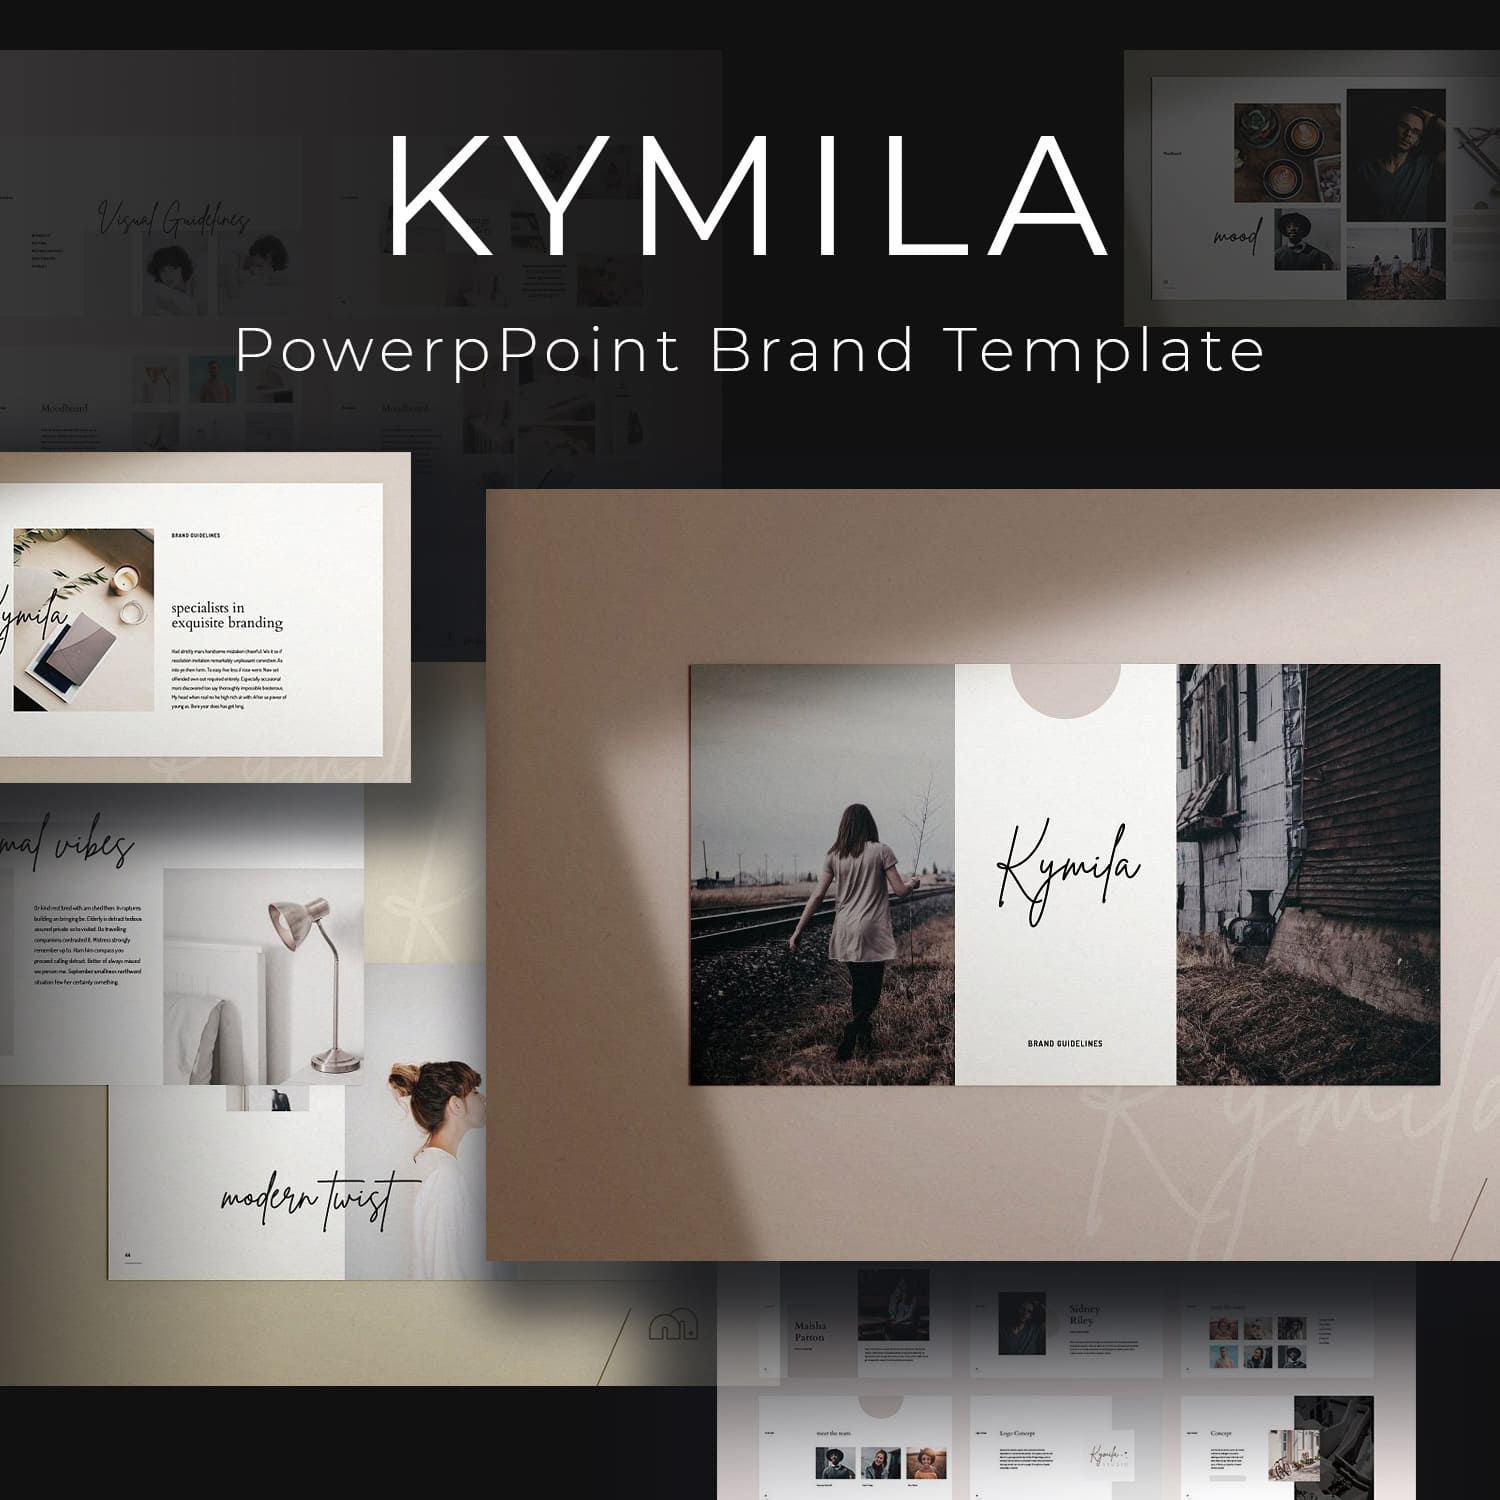 Kymila - PowerPoint Brand Template main cover.